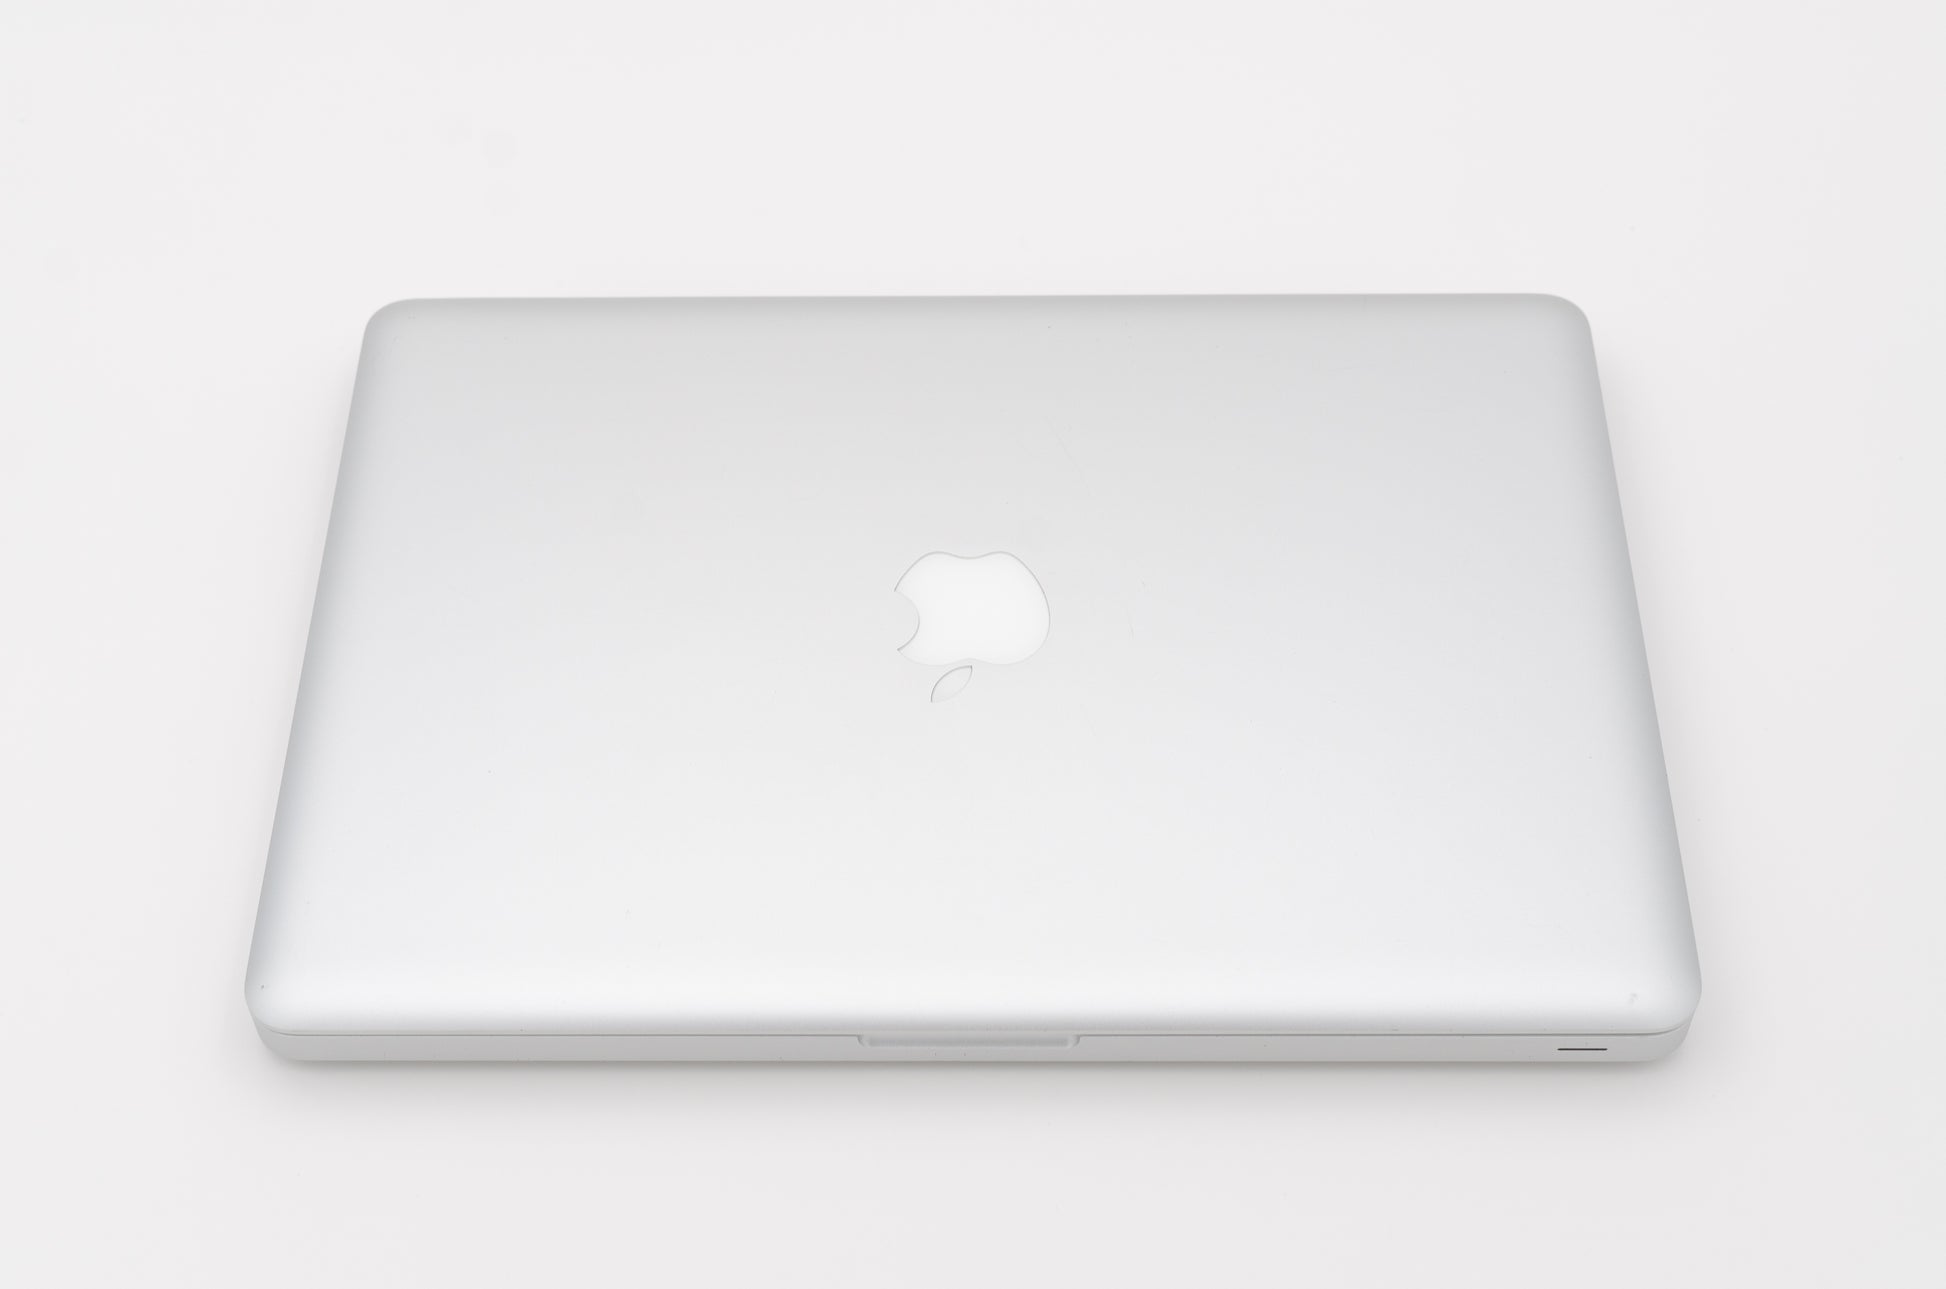 apple-mid-2012-13.3-inch-macbook-pro-a1278-aluminum-dci5 - 2.5ghz processor, 4gb ram, hd 4000 - 512mb gpu-md101ll/a-3